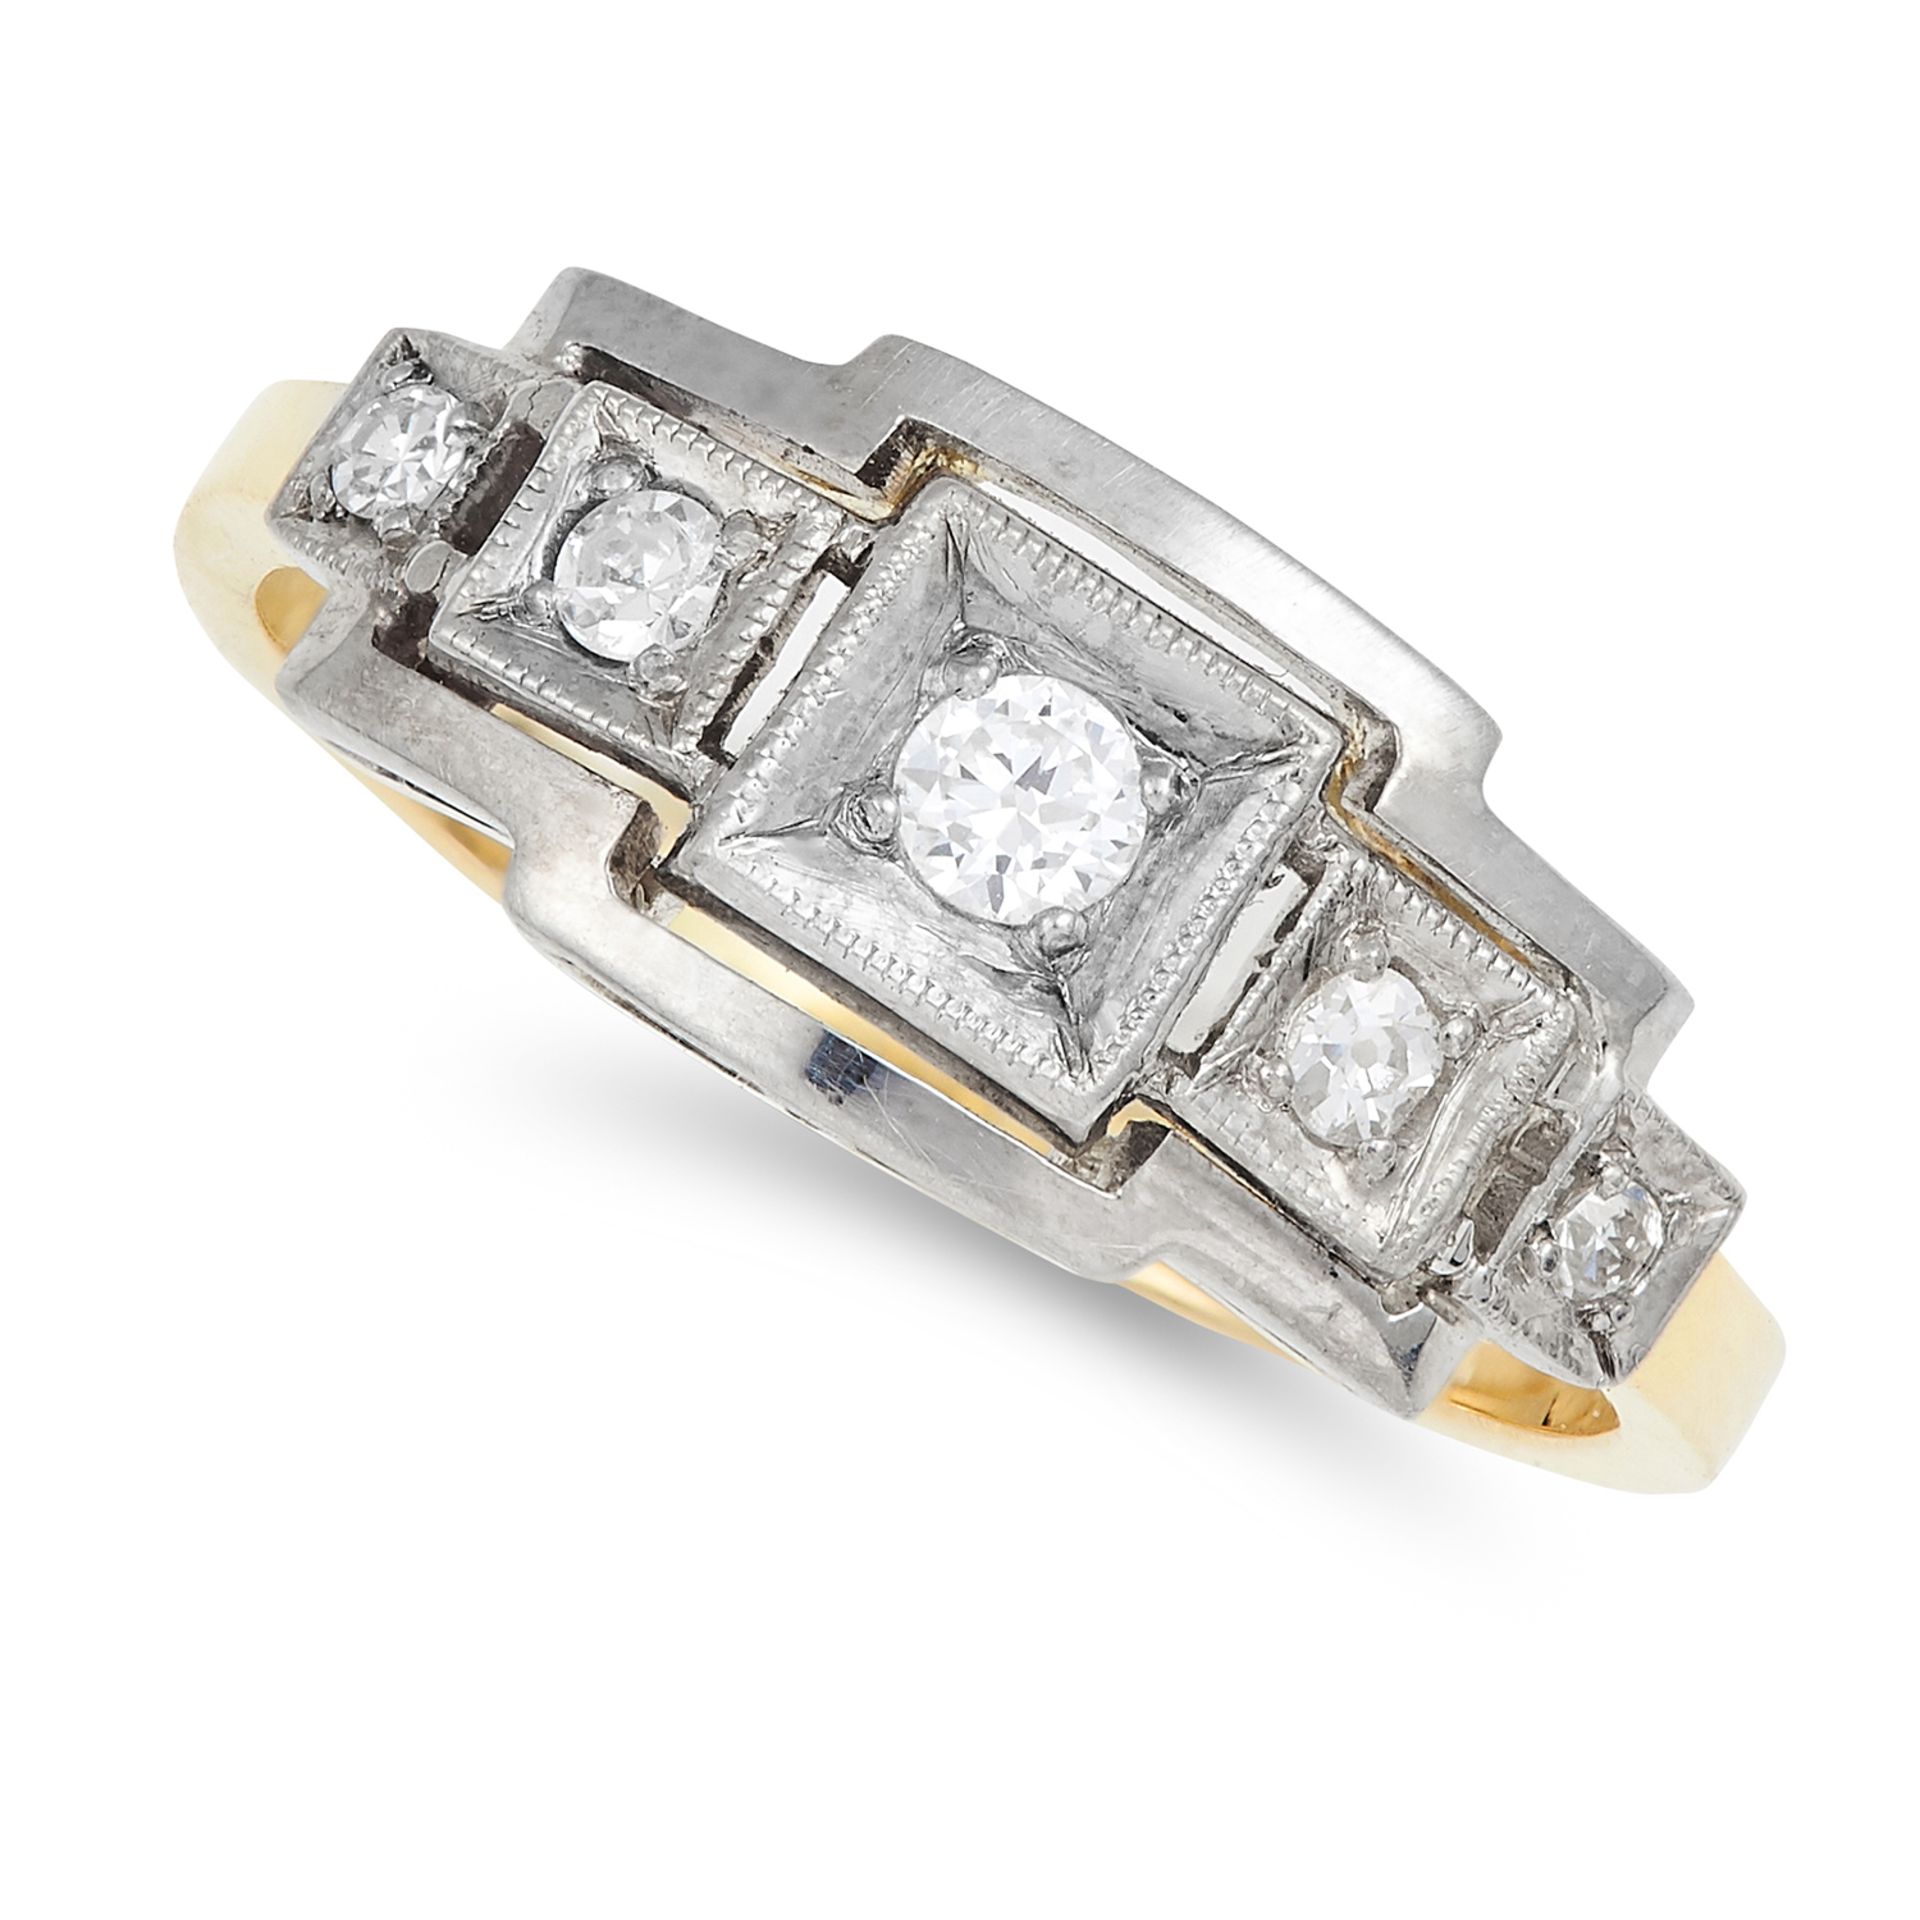 DIAMOND DRESS RING in Art Deco style set with round cut diamonds, size M / 6, 2.7g.